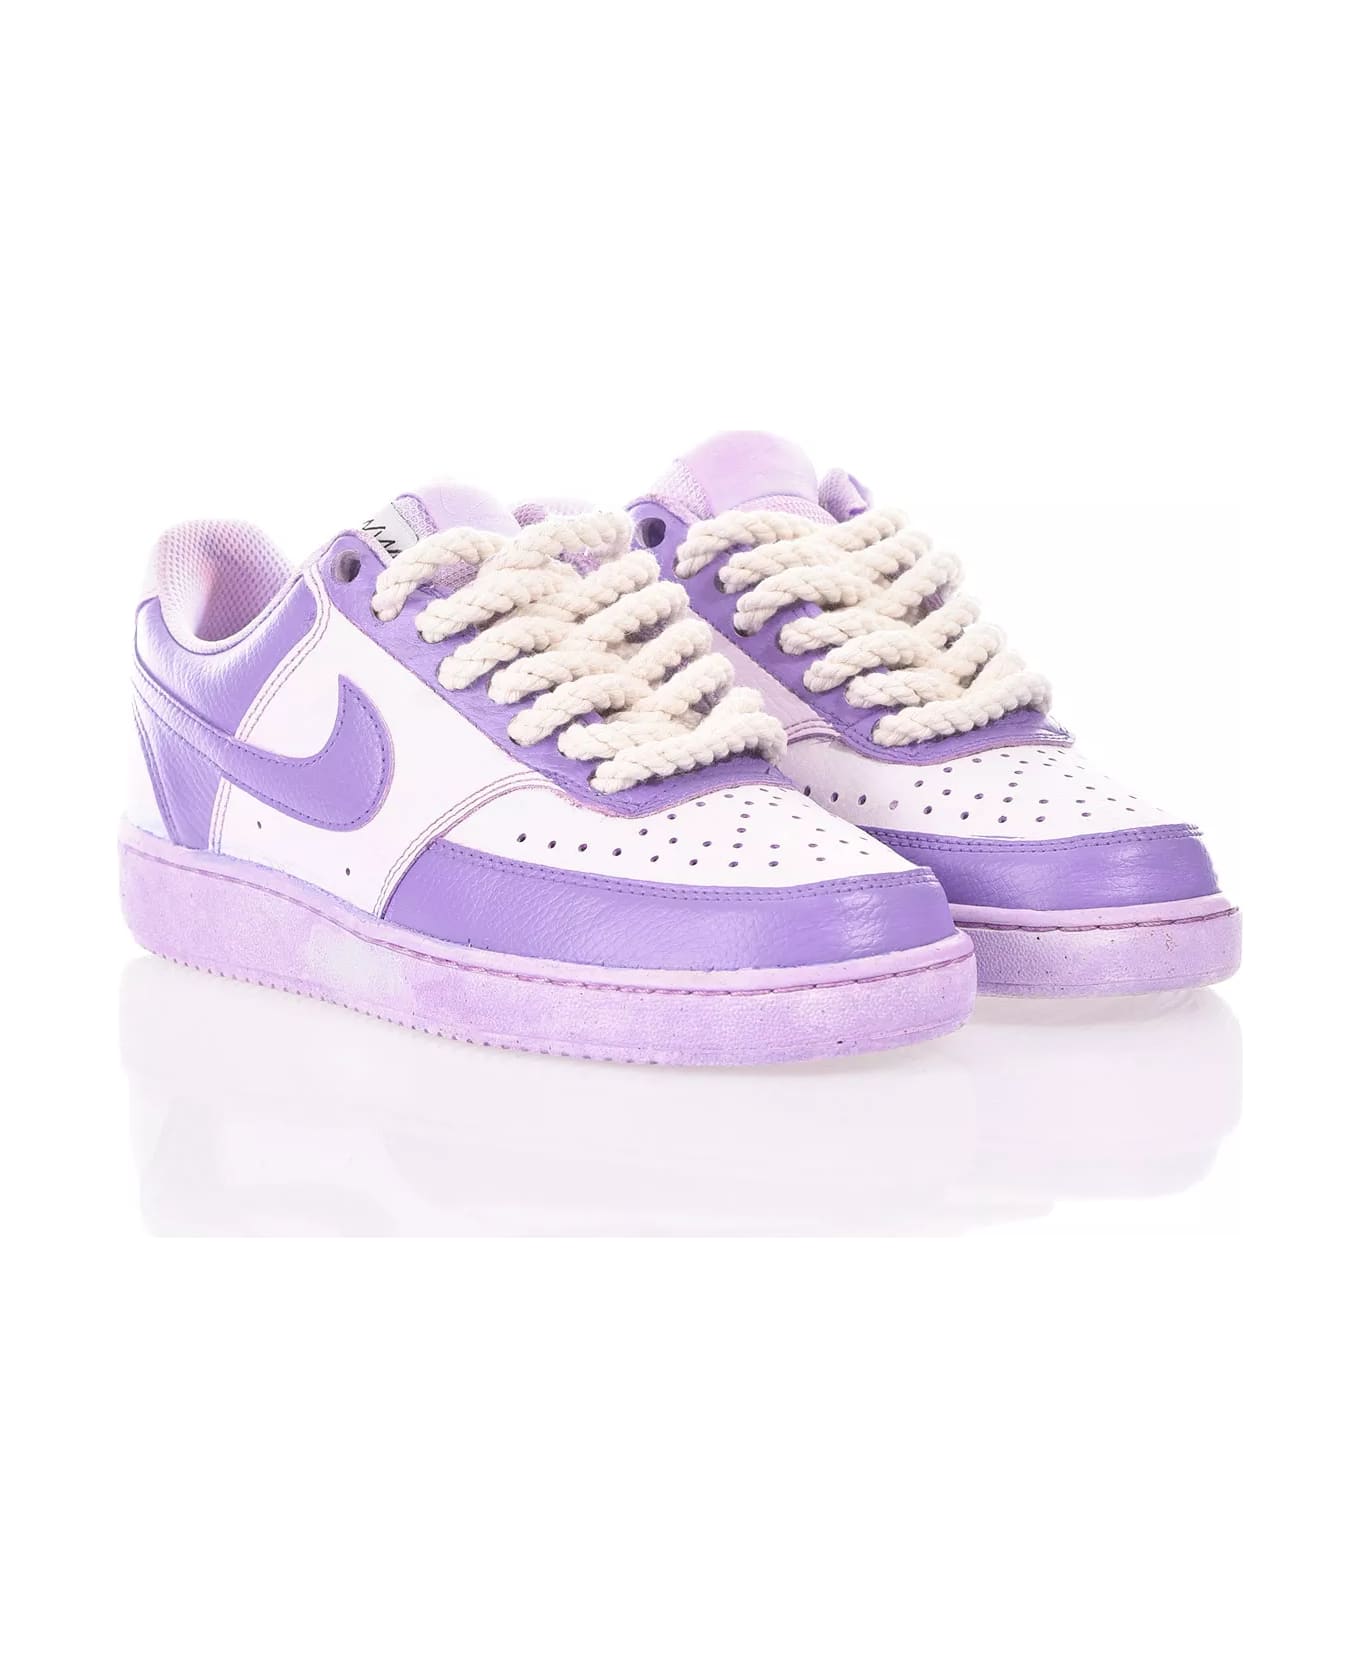 Mimanera Nike Purple Shoes: Mimanerashop.com